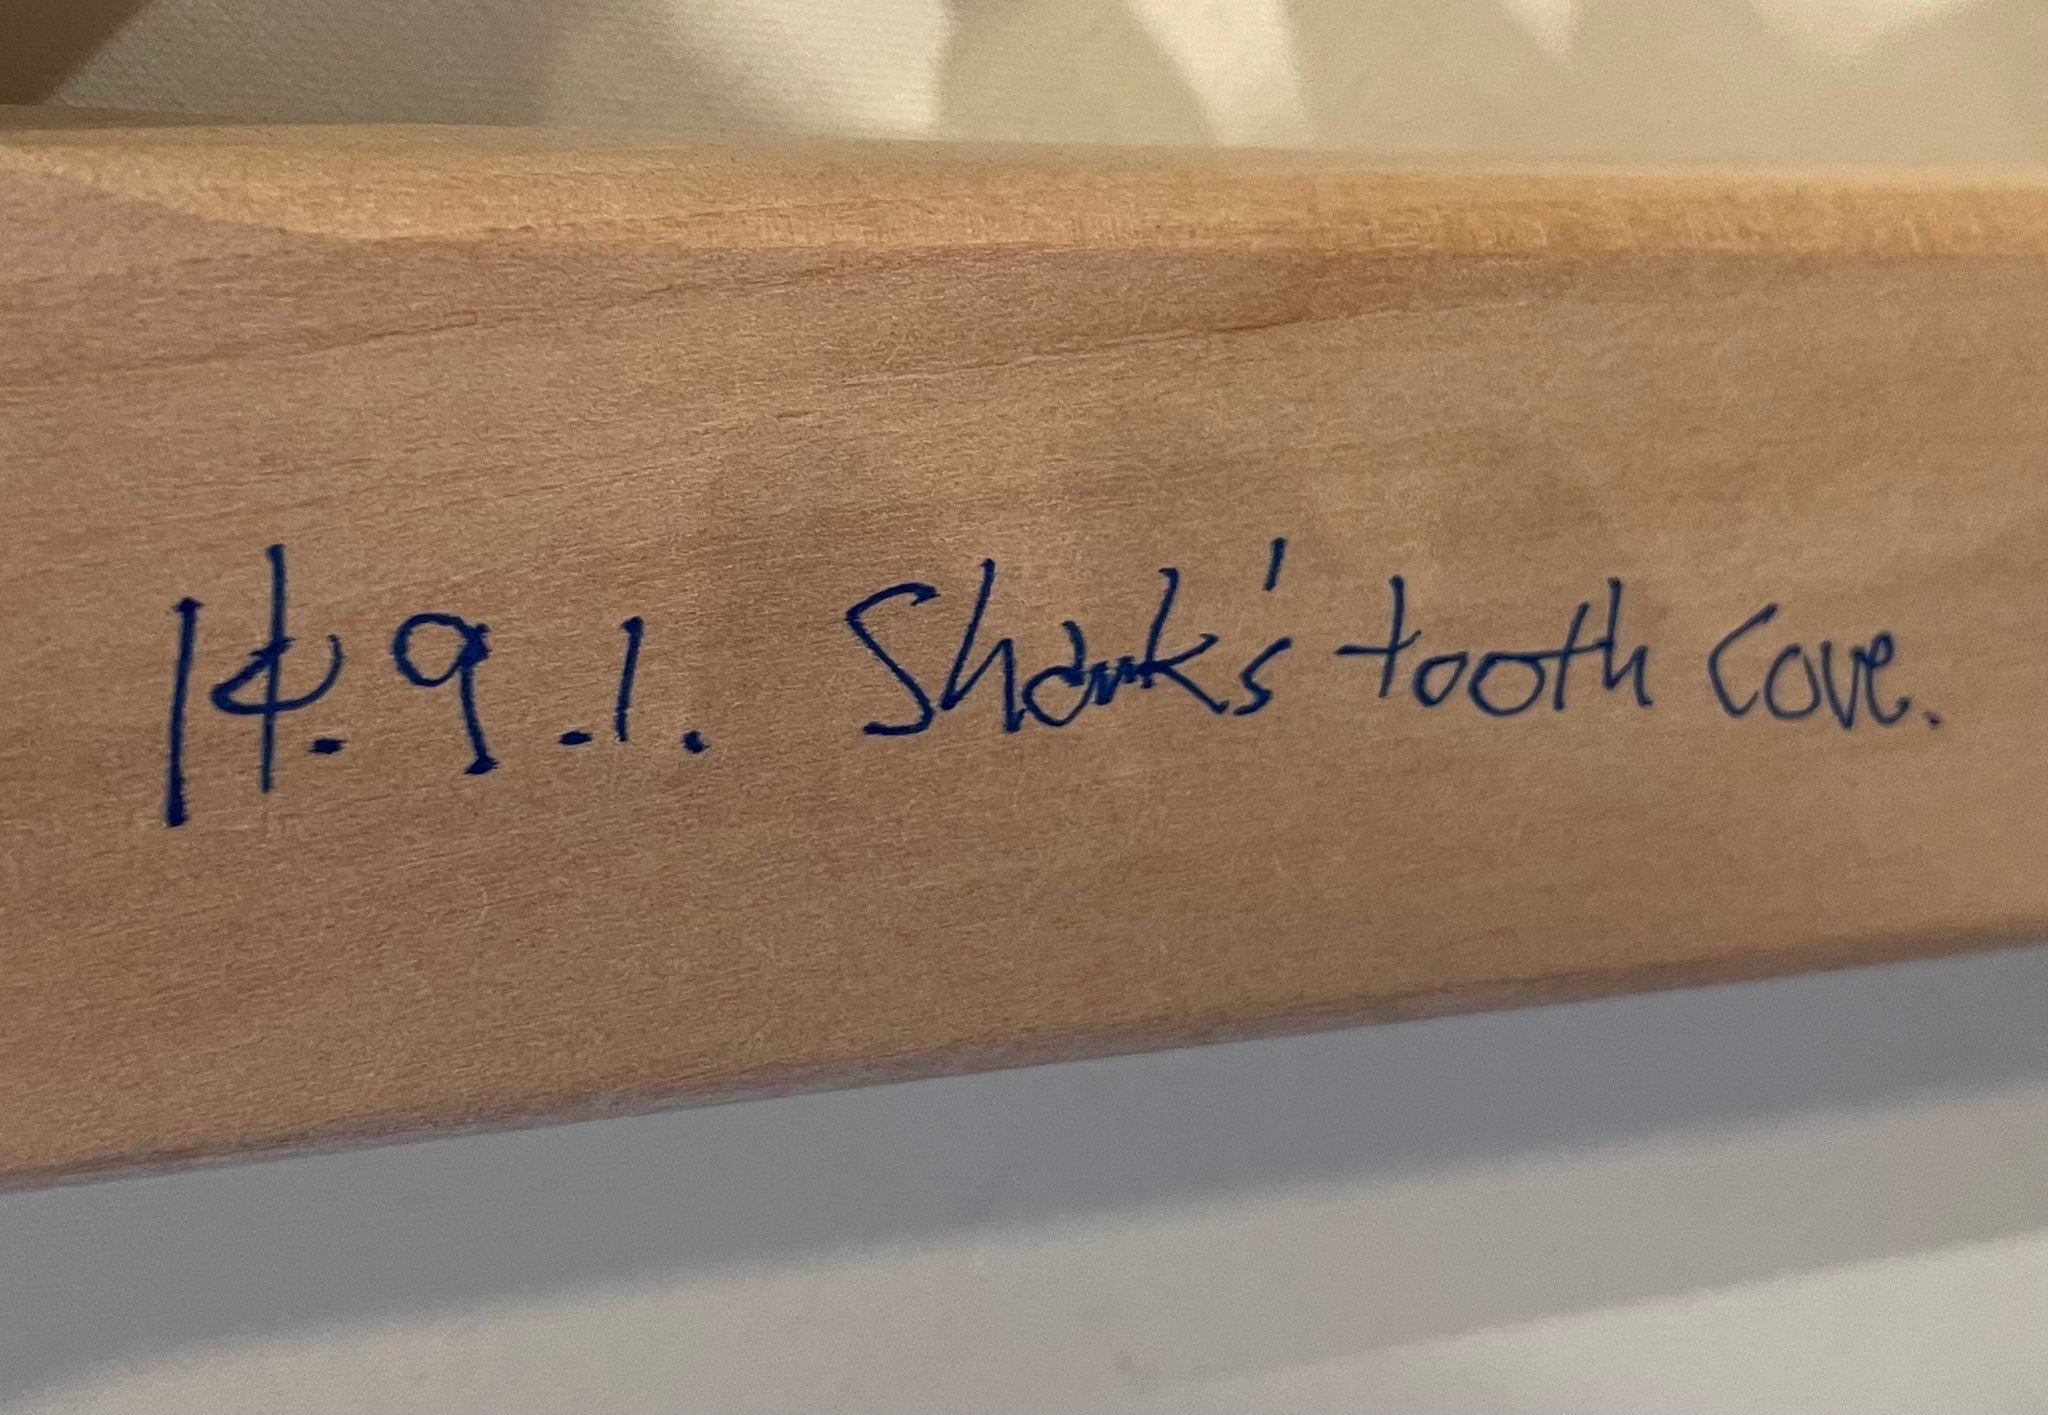 Jim Caldwell "Shark's Tooth Cove".